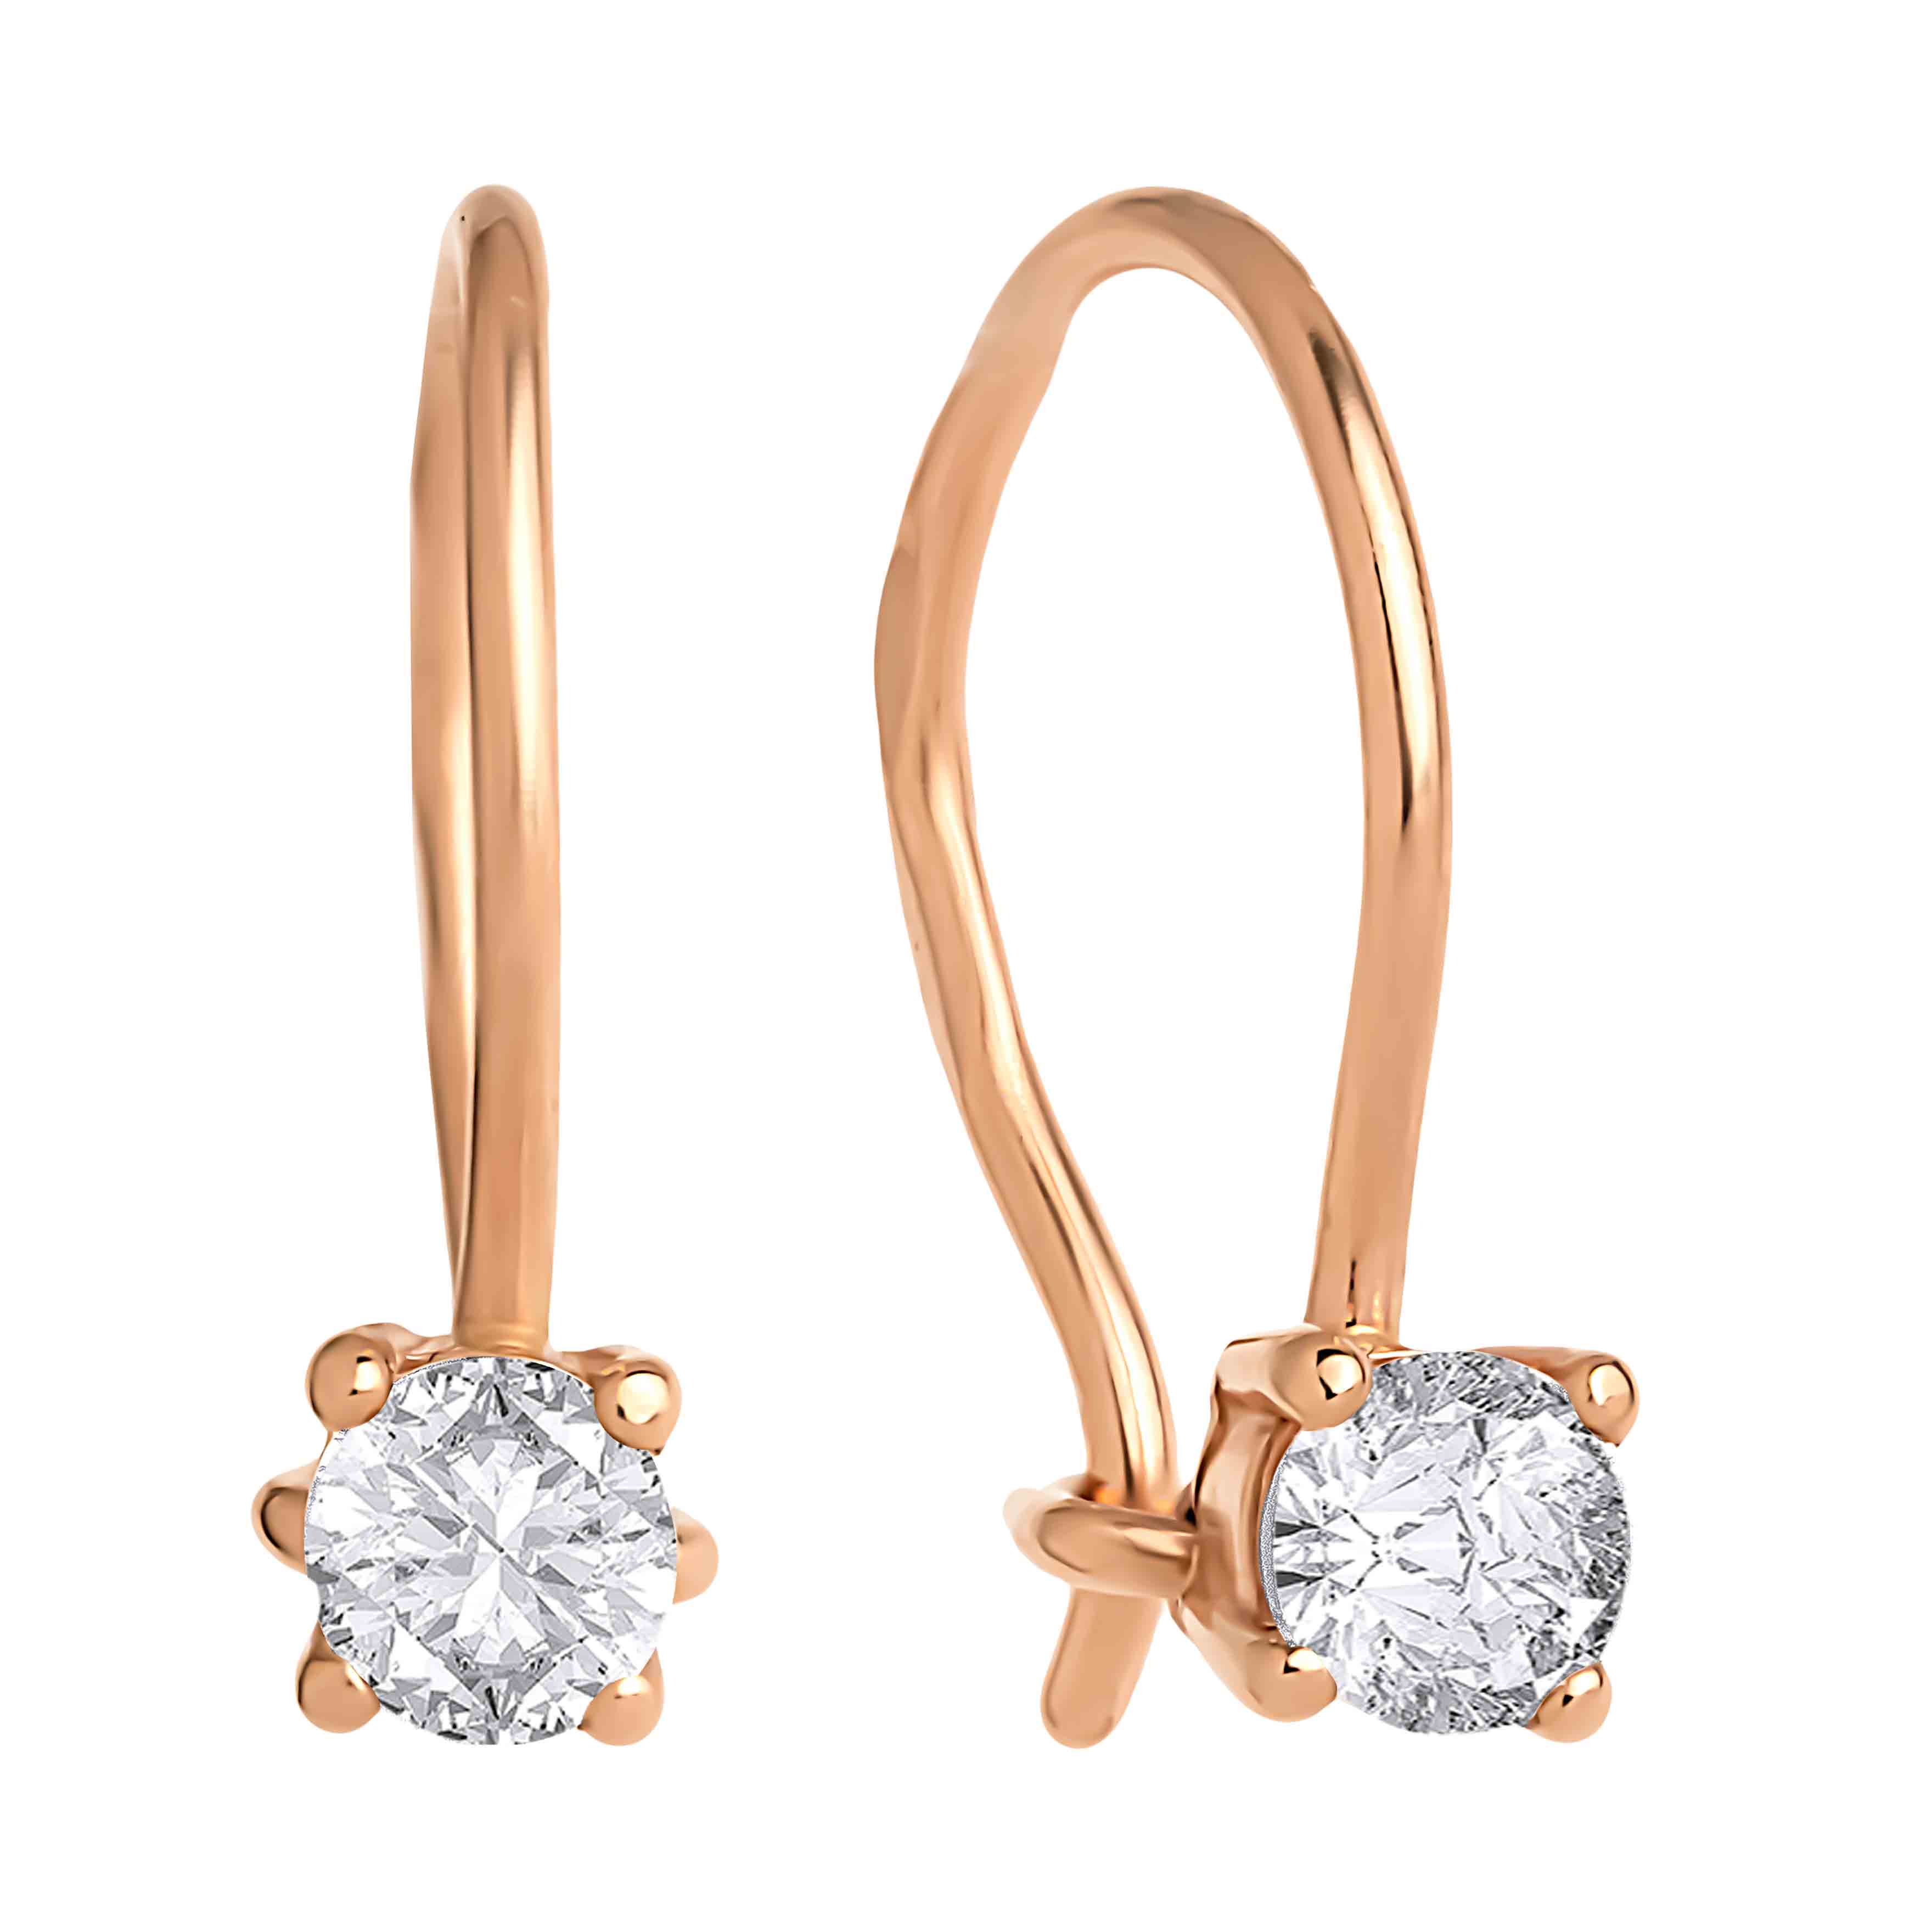 Gold Earrings For Kids | Buy Kids Jewellery Online At Best Price Dubai,UAE  – Tagged 